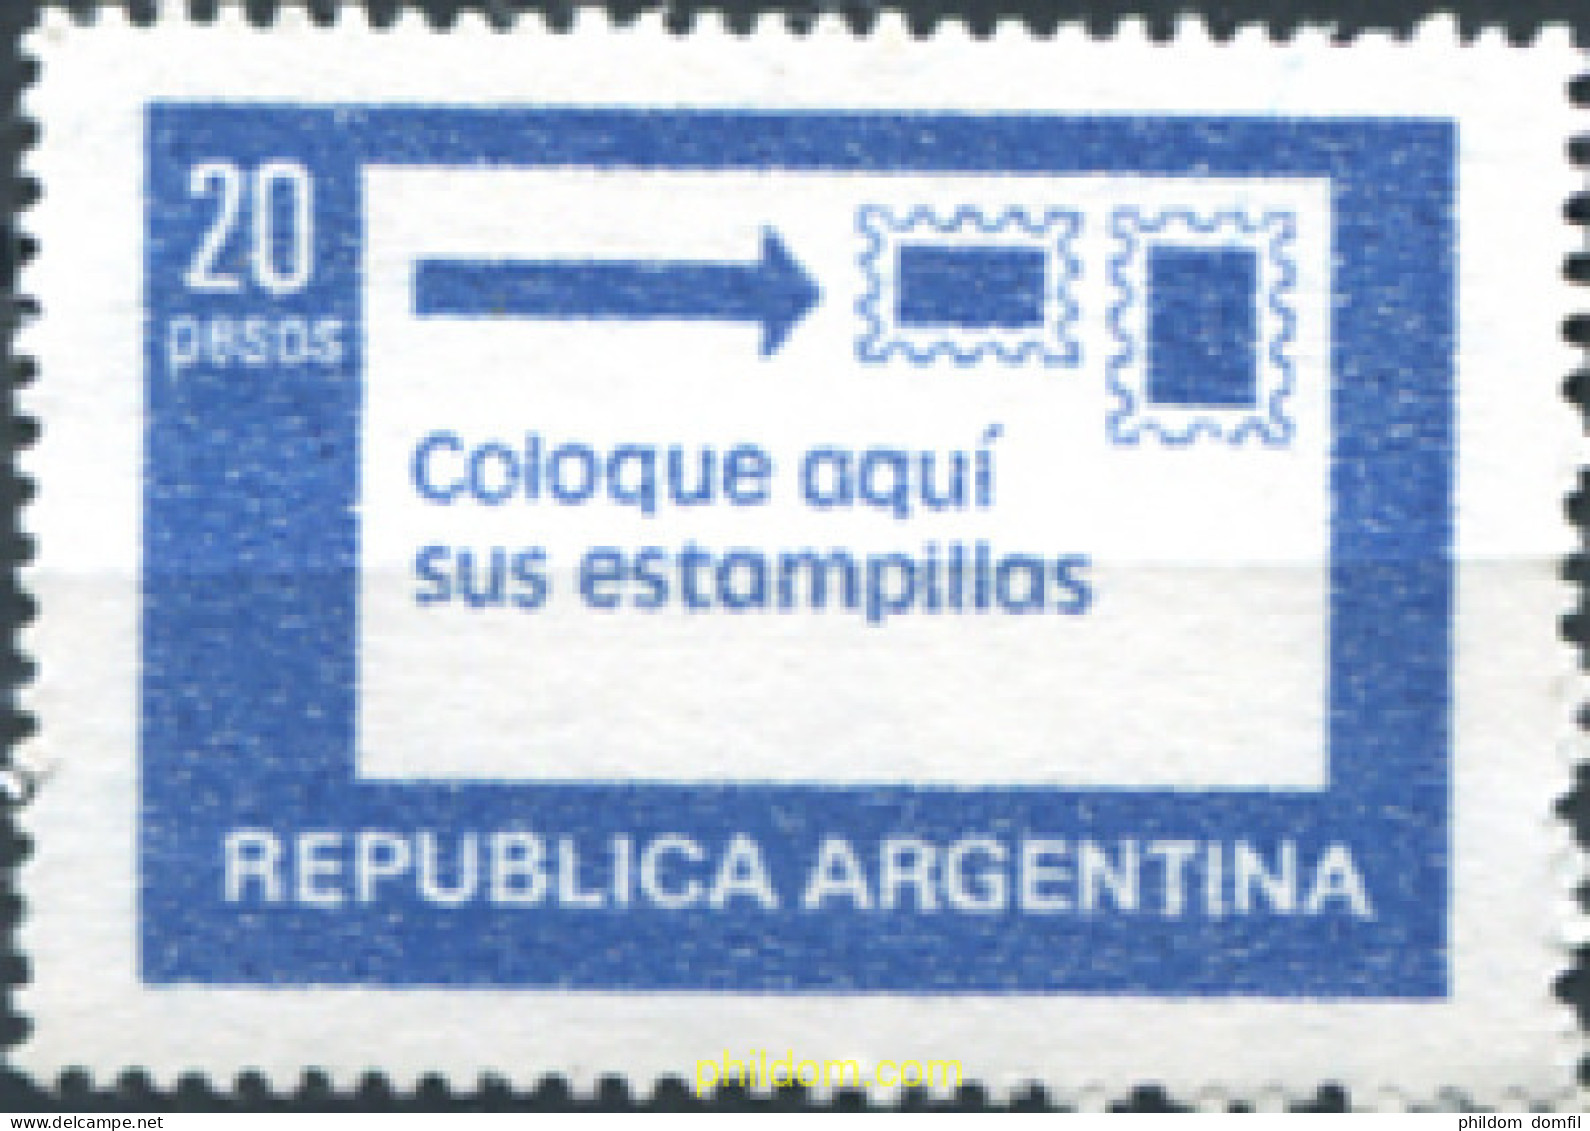 728916 MNH ARGENTINA 1978 SLOGAN POSTAL - Ongebruikt